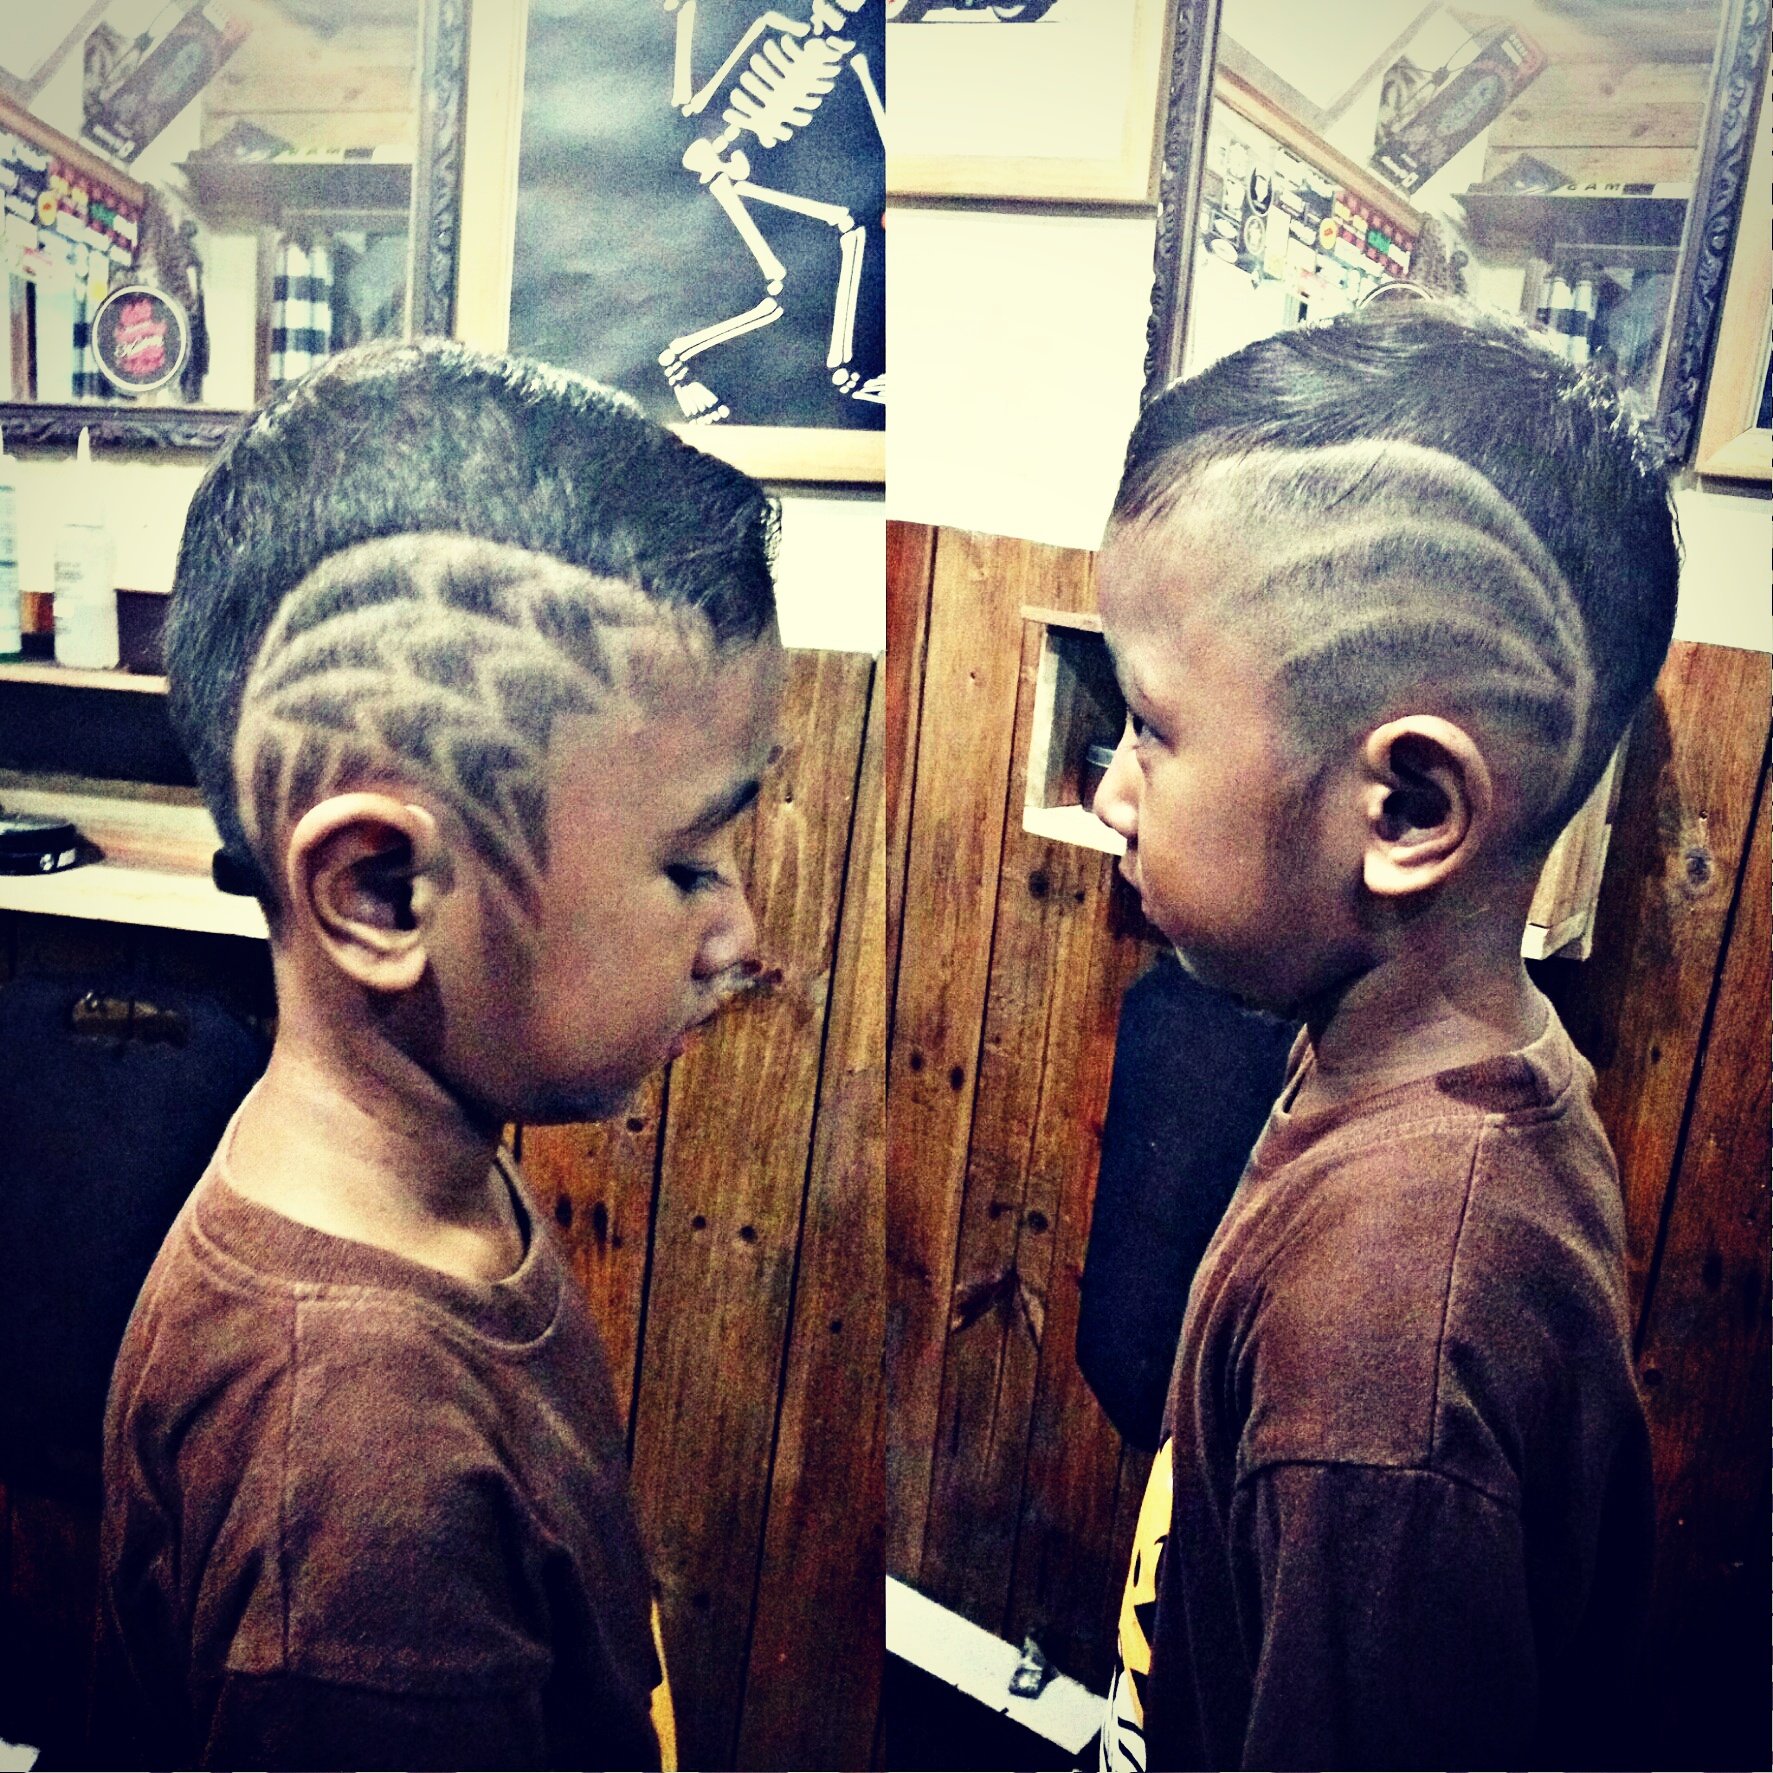 Kids hair styling in barbershop Stock Photo by ©bezikus 136636552